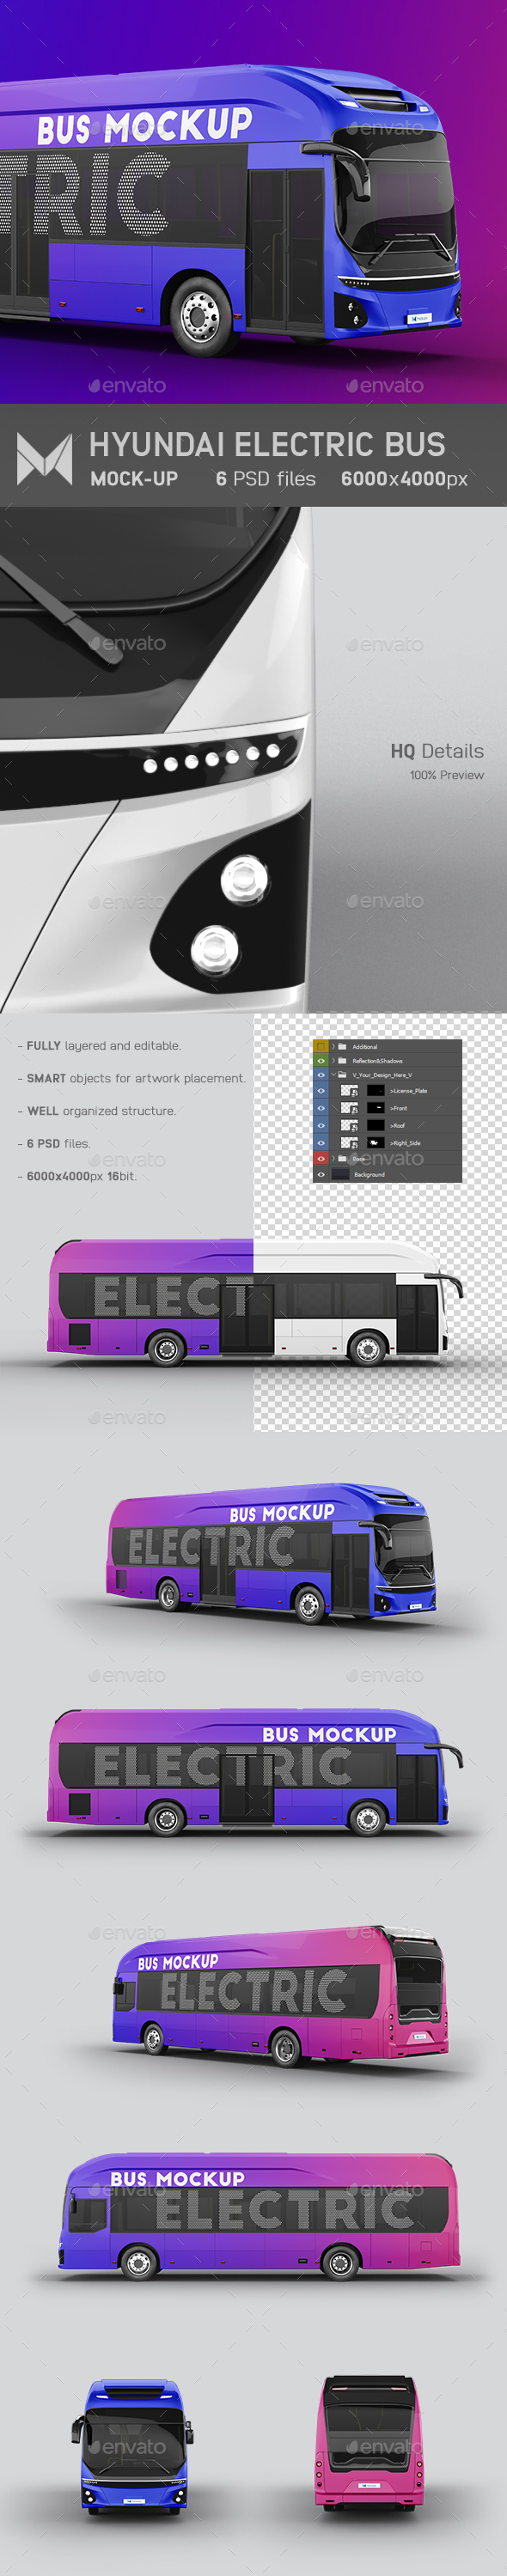 Hyundai Electric City Bus Mockup